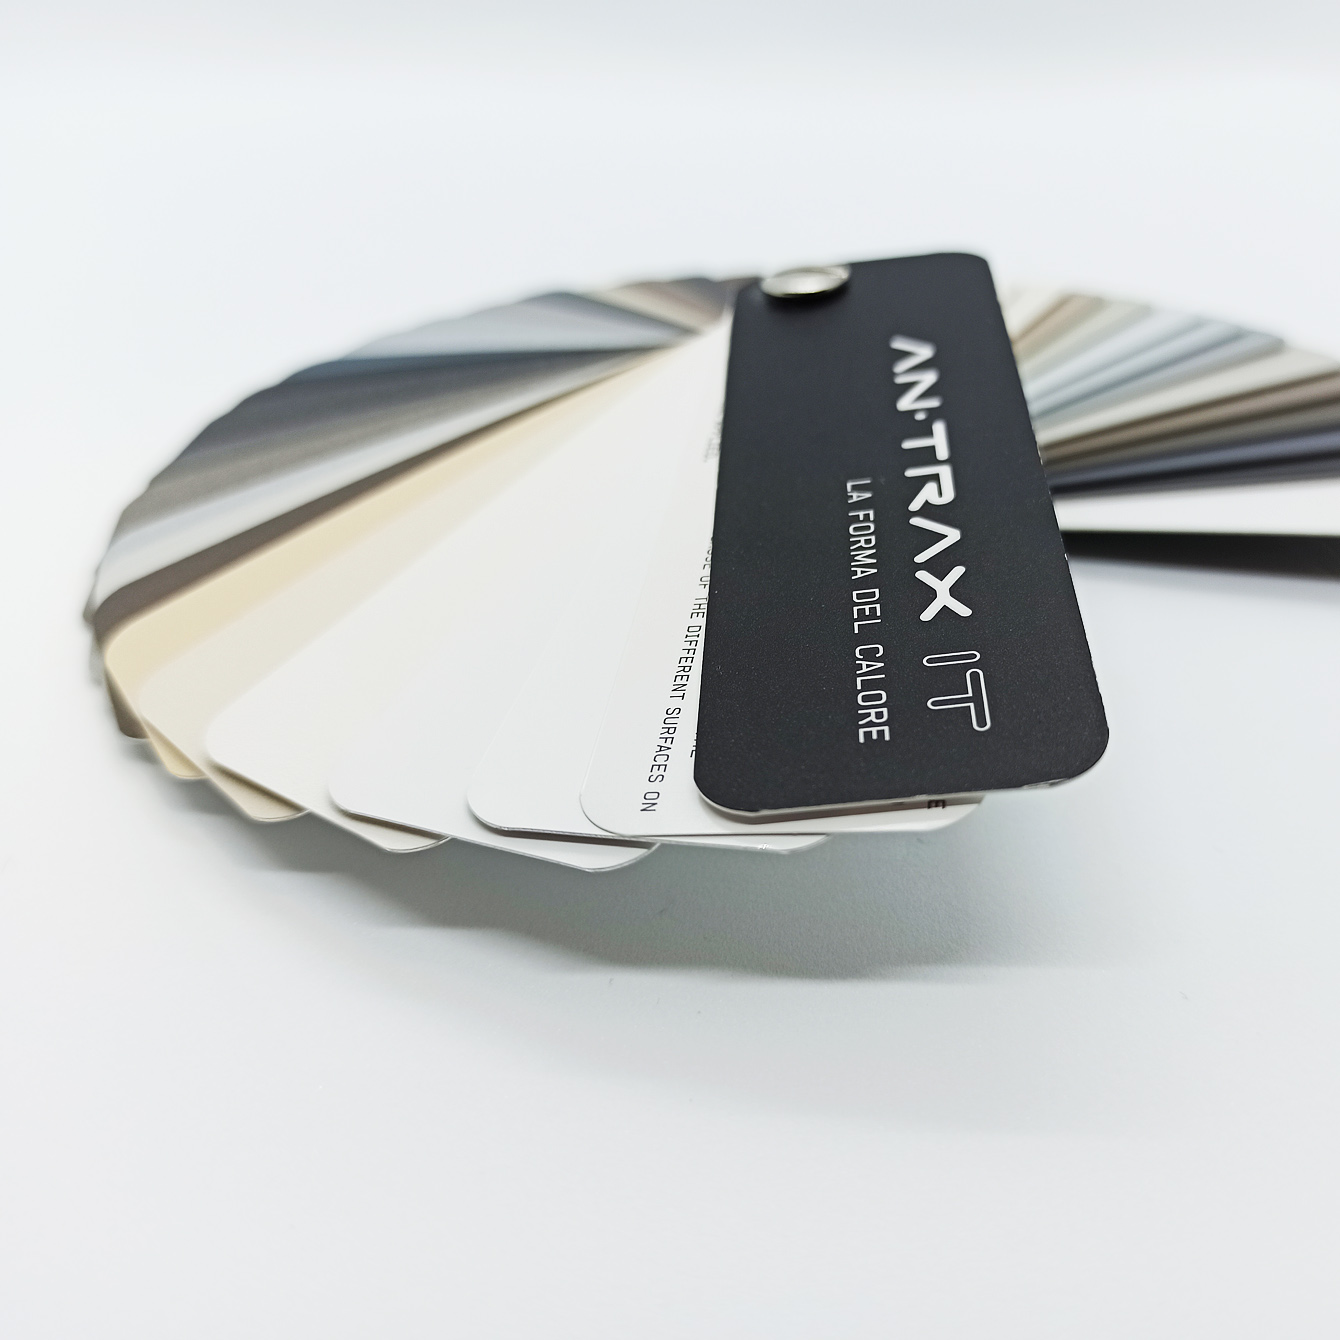 Waffle - Moderne ANTRAX IT Aluminium-Designheizung von Piero Lissoni | Radiamo